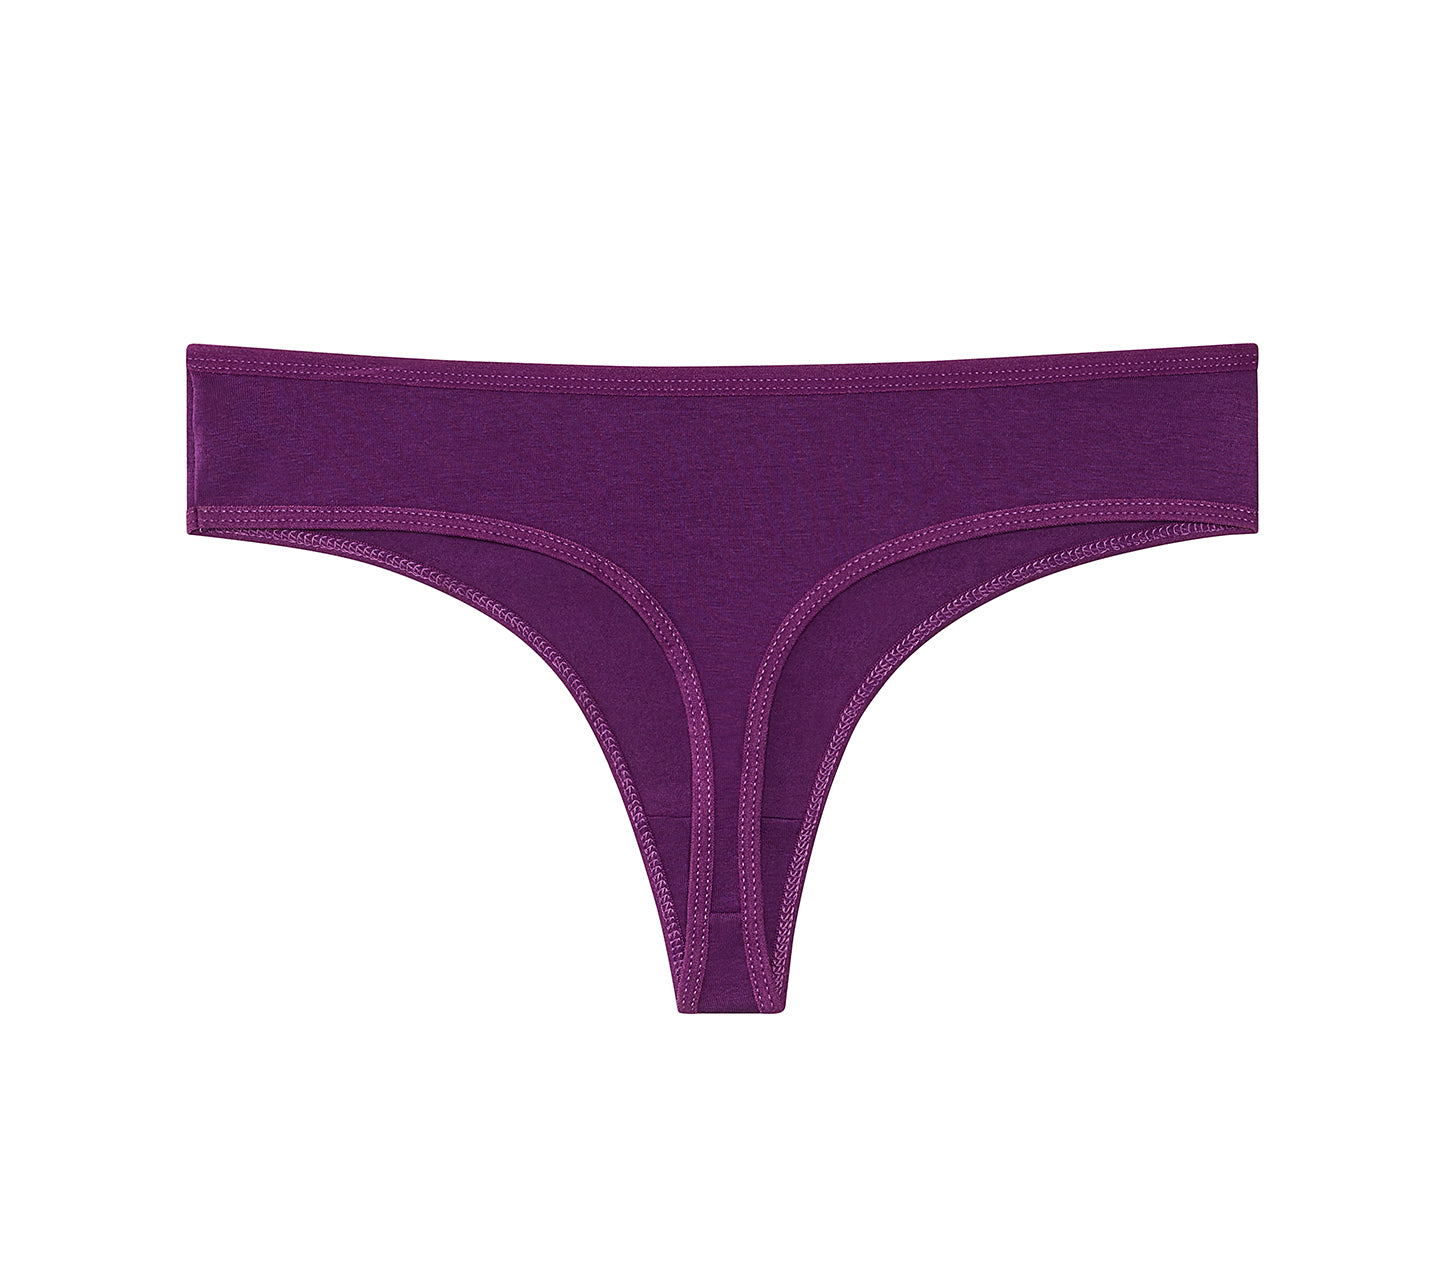 Panties Panties T String Thongs Underwear Women 95%Cotton Briefs G-string